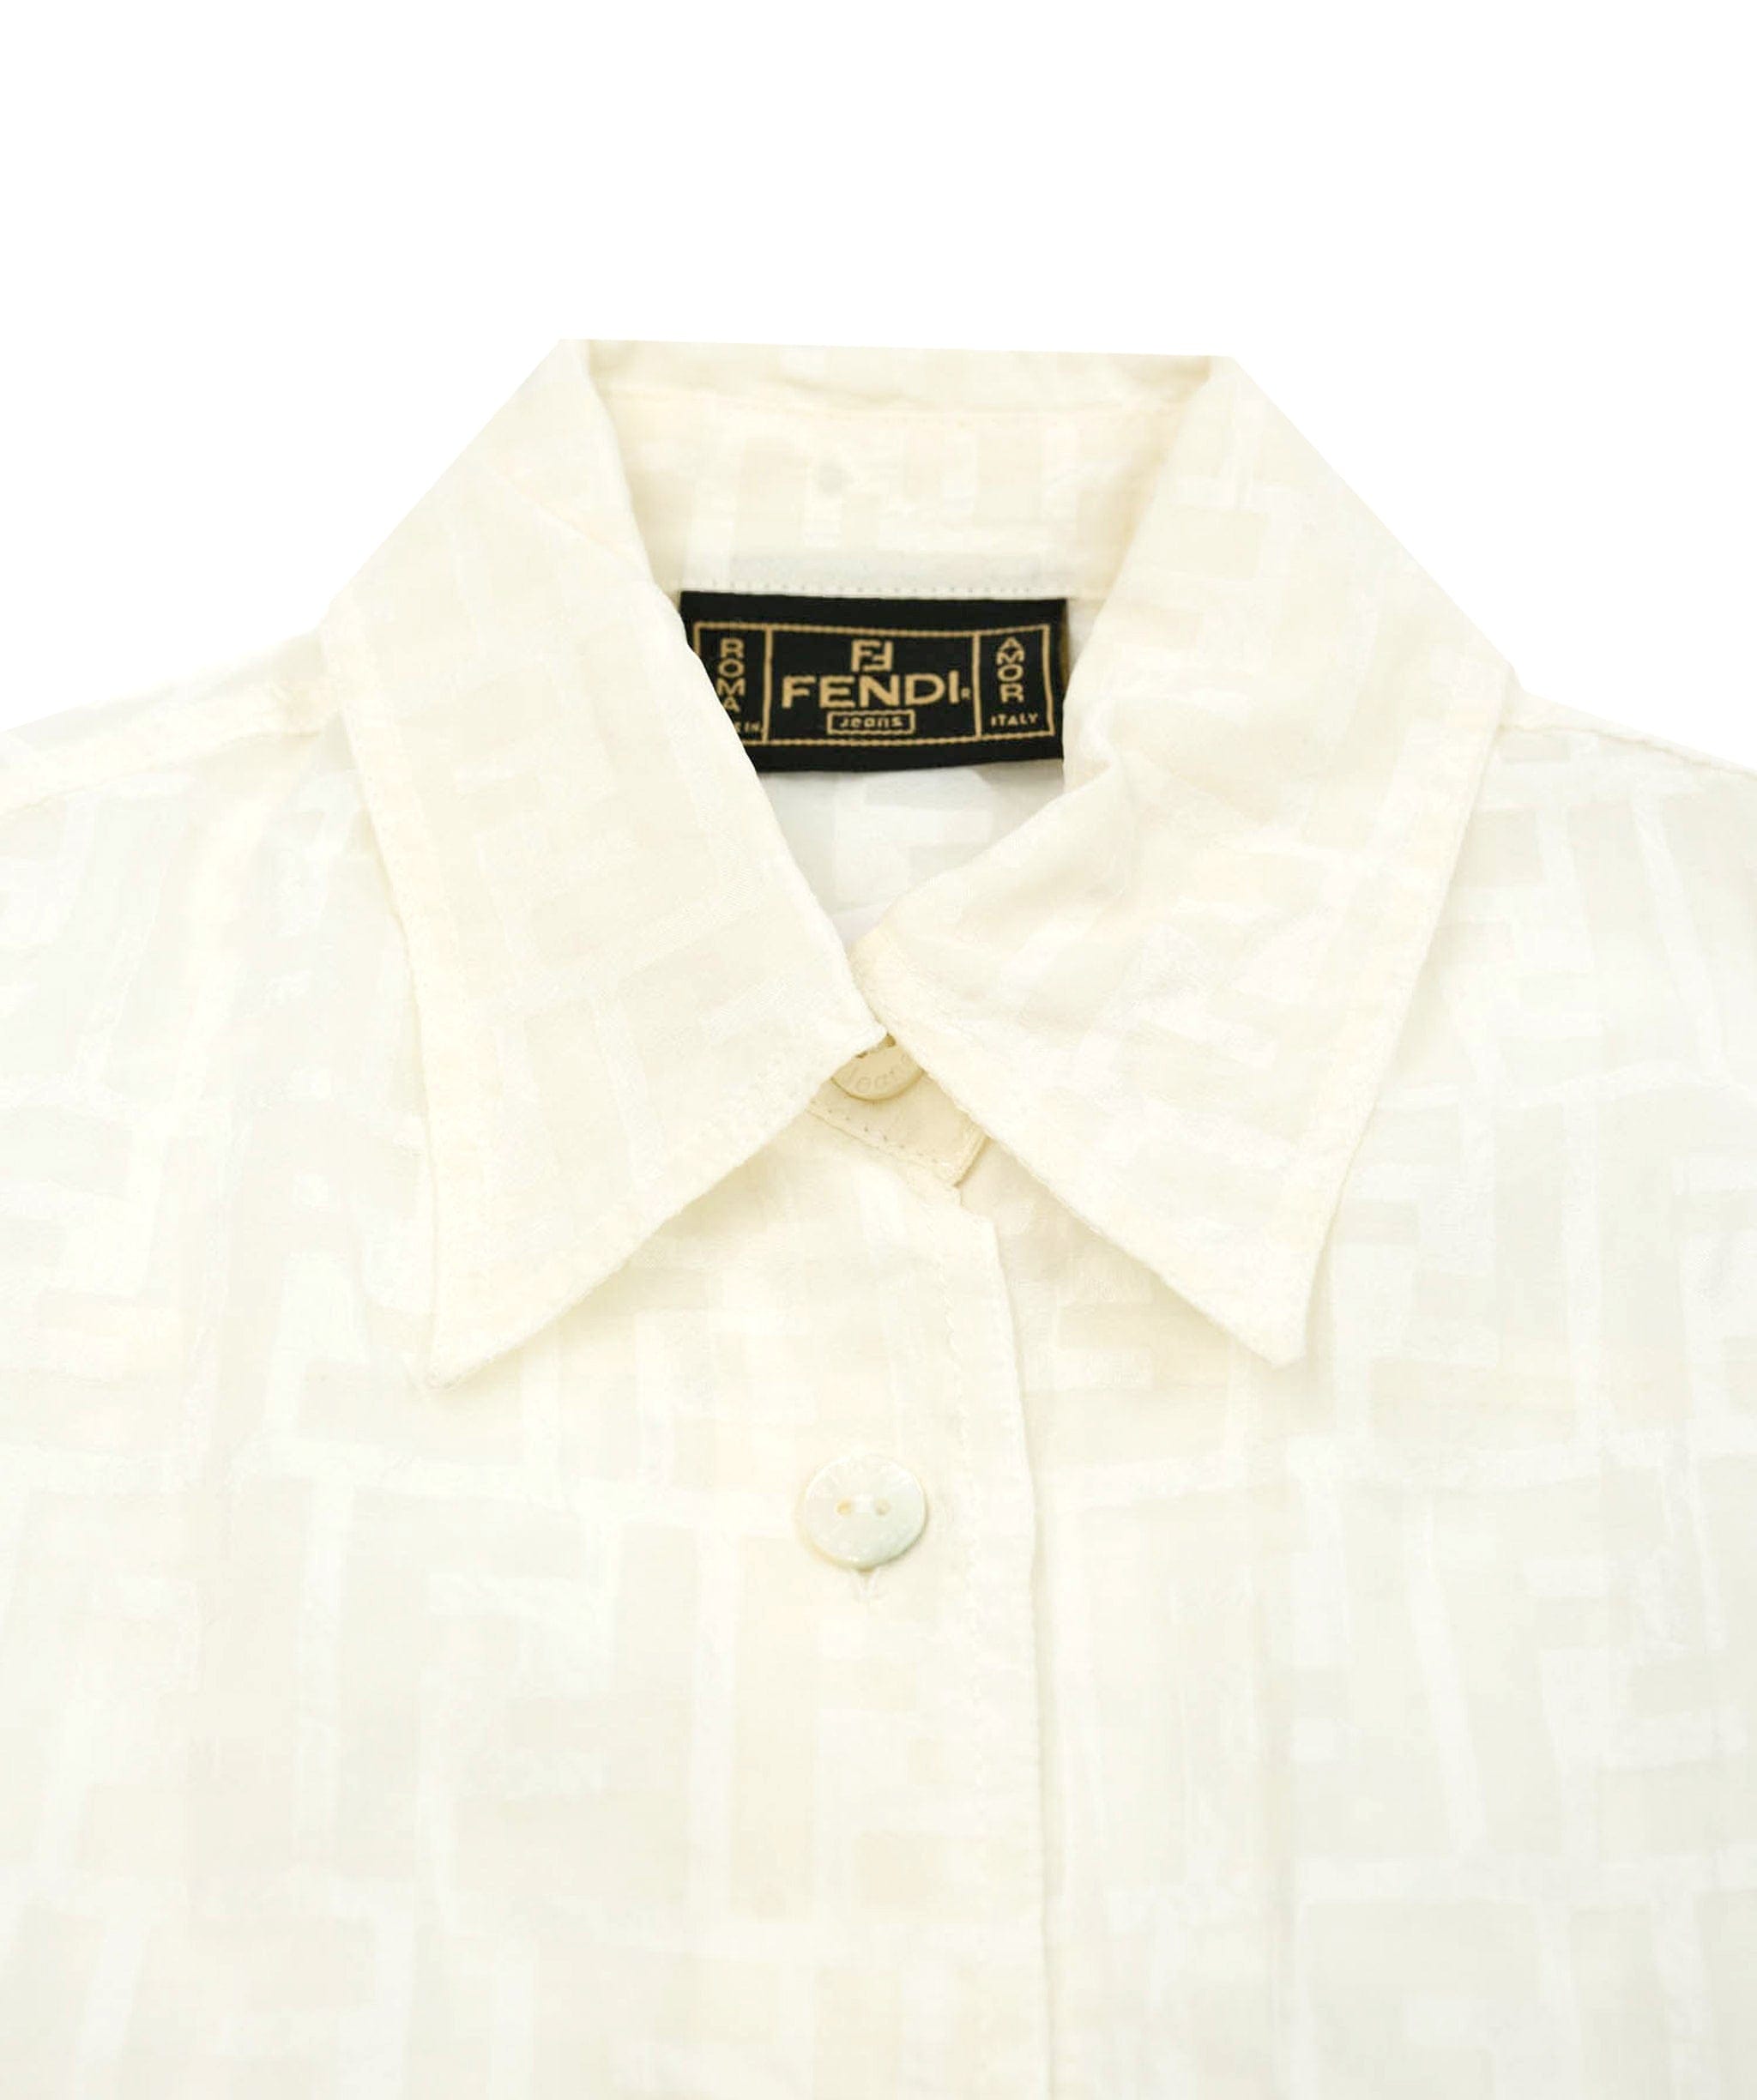 Fendi Fendi Zucca See-Through Shirt Sleeveless White ASL4674